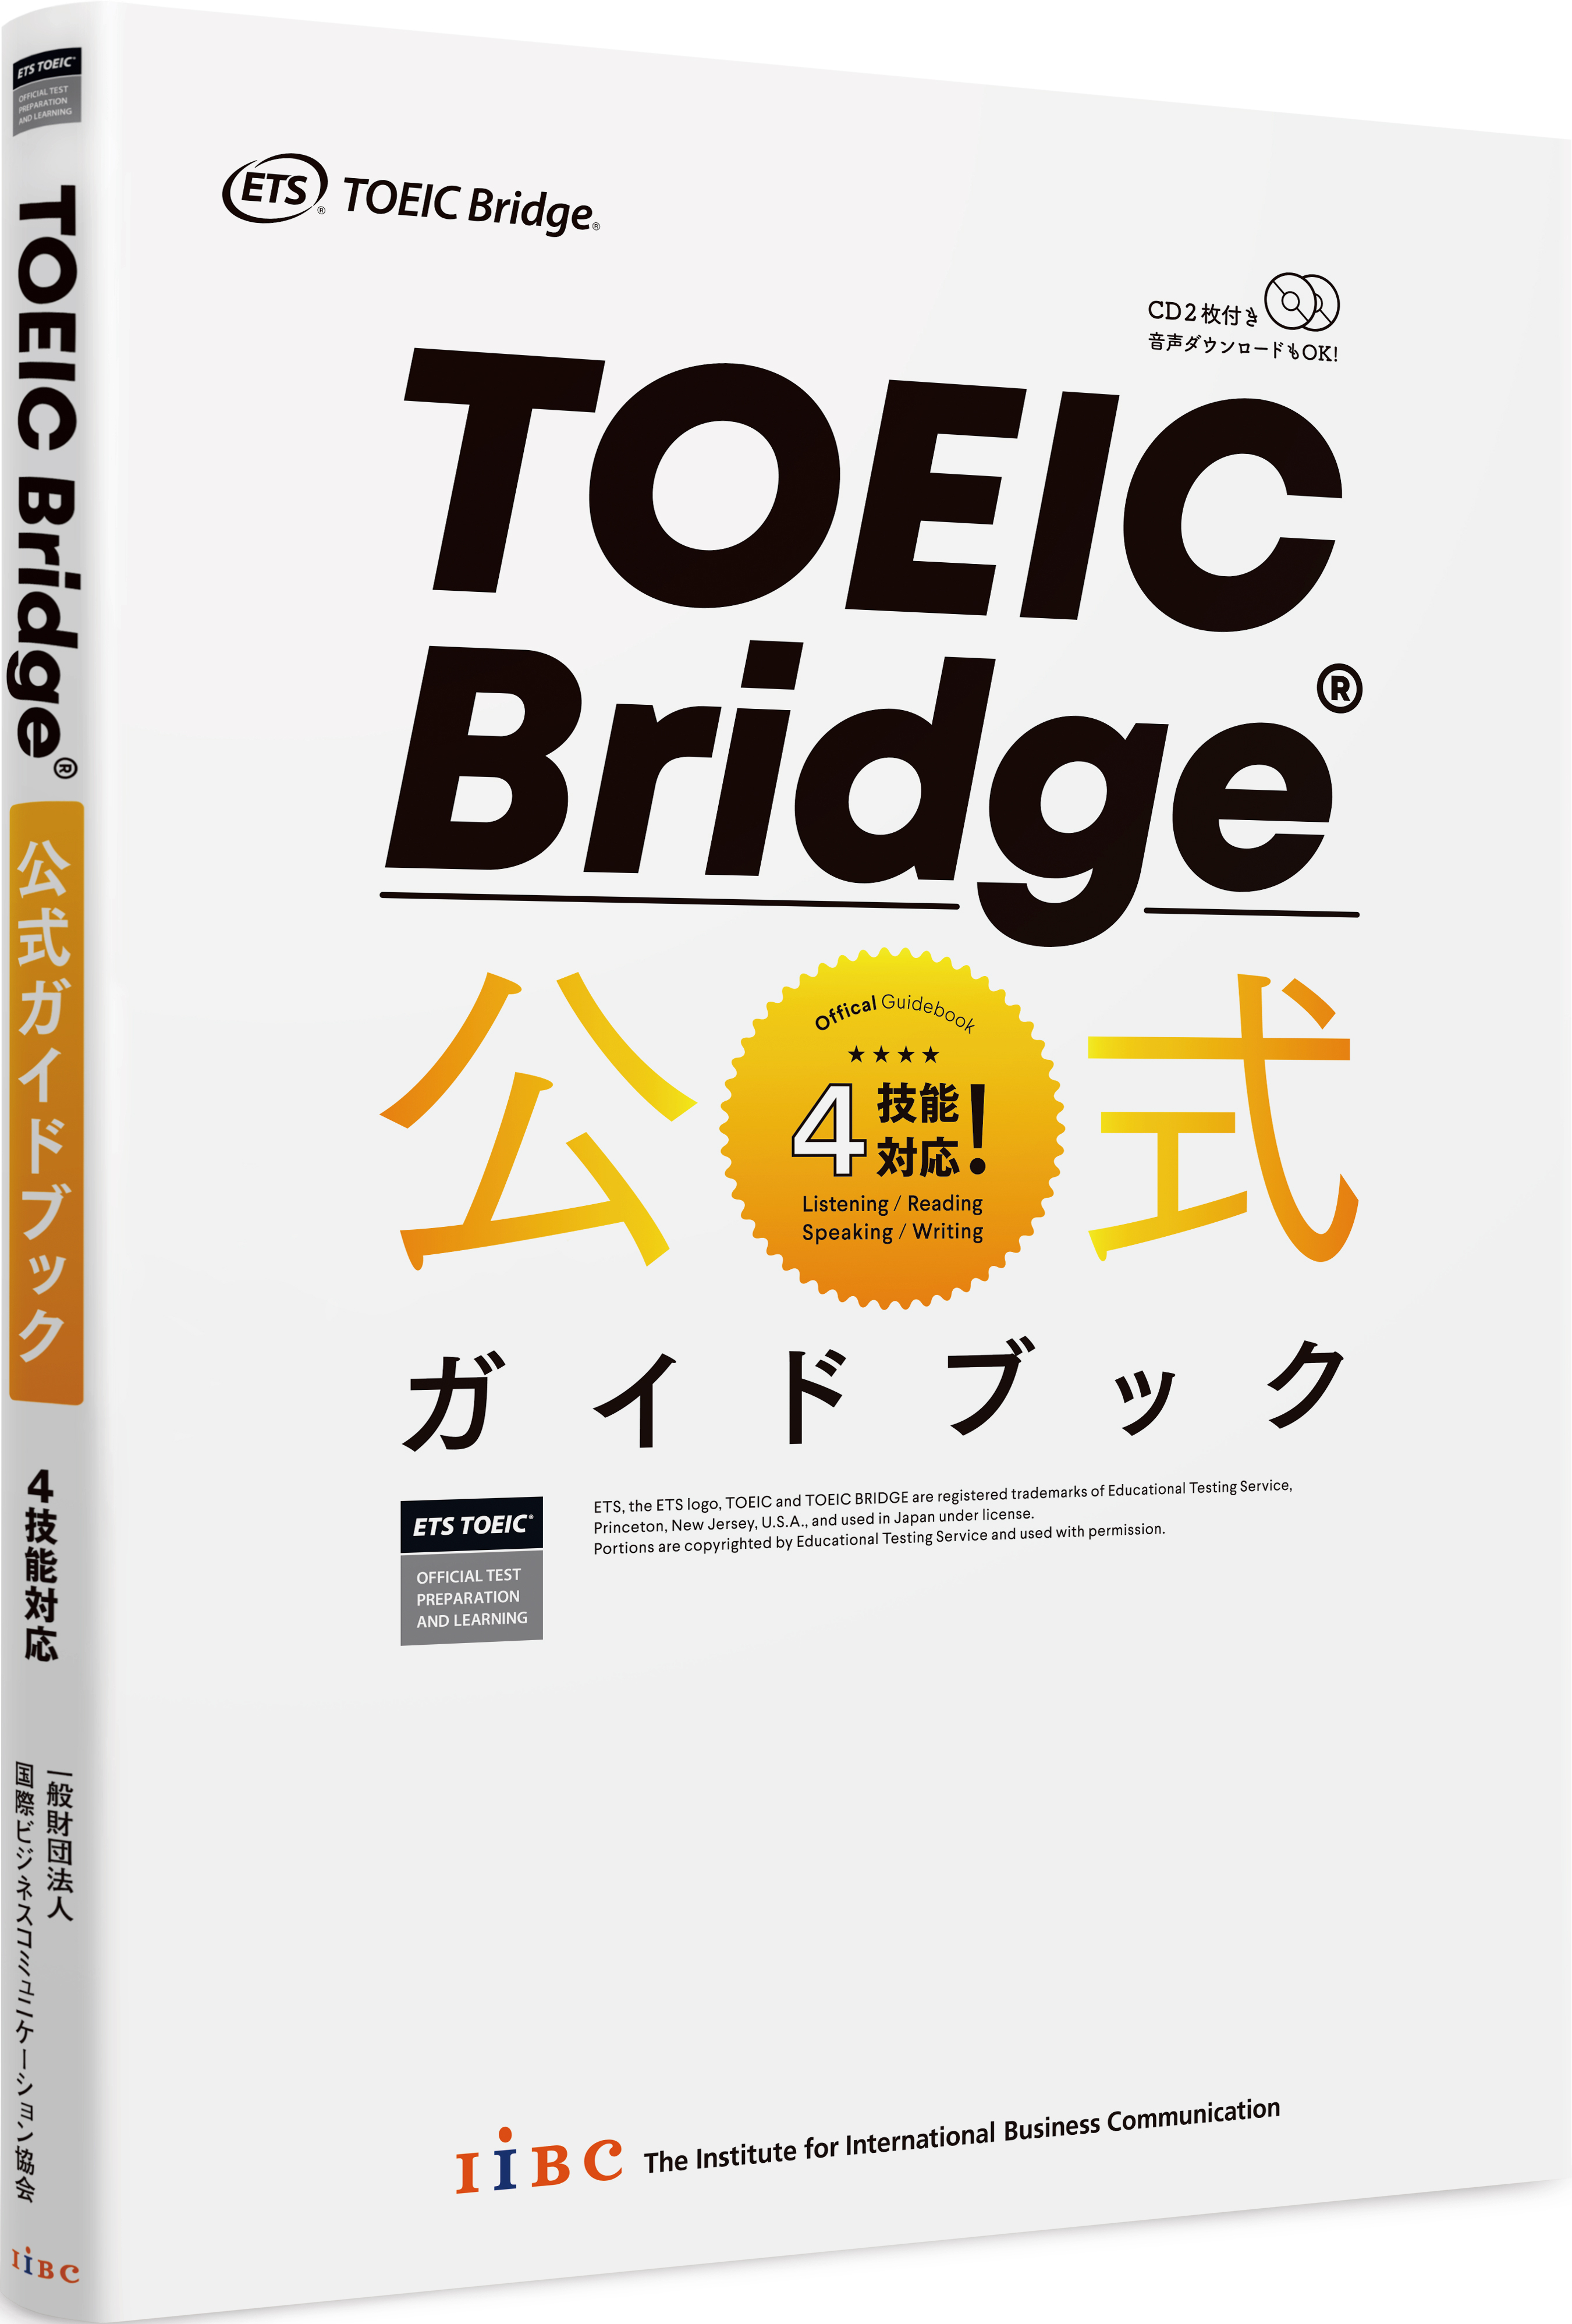 TOEIC Bridge(R) 公式ガイドブック_カバー画像